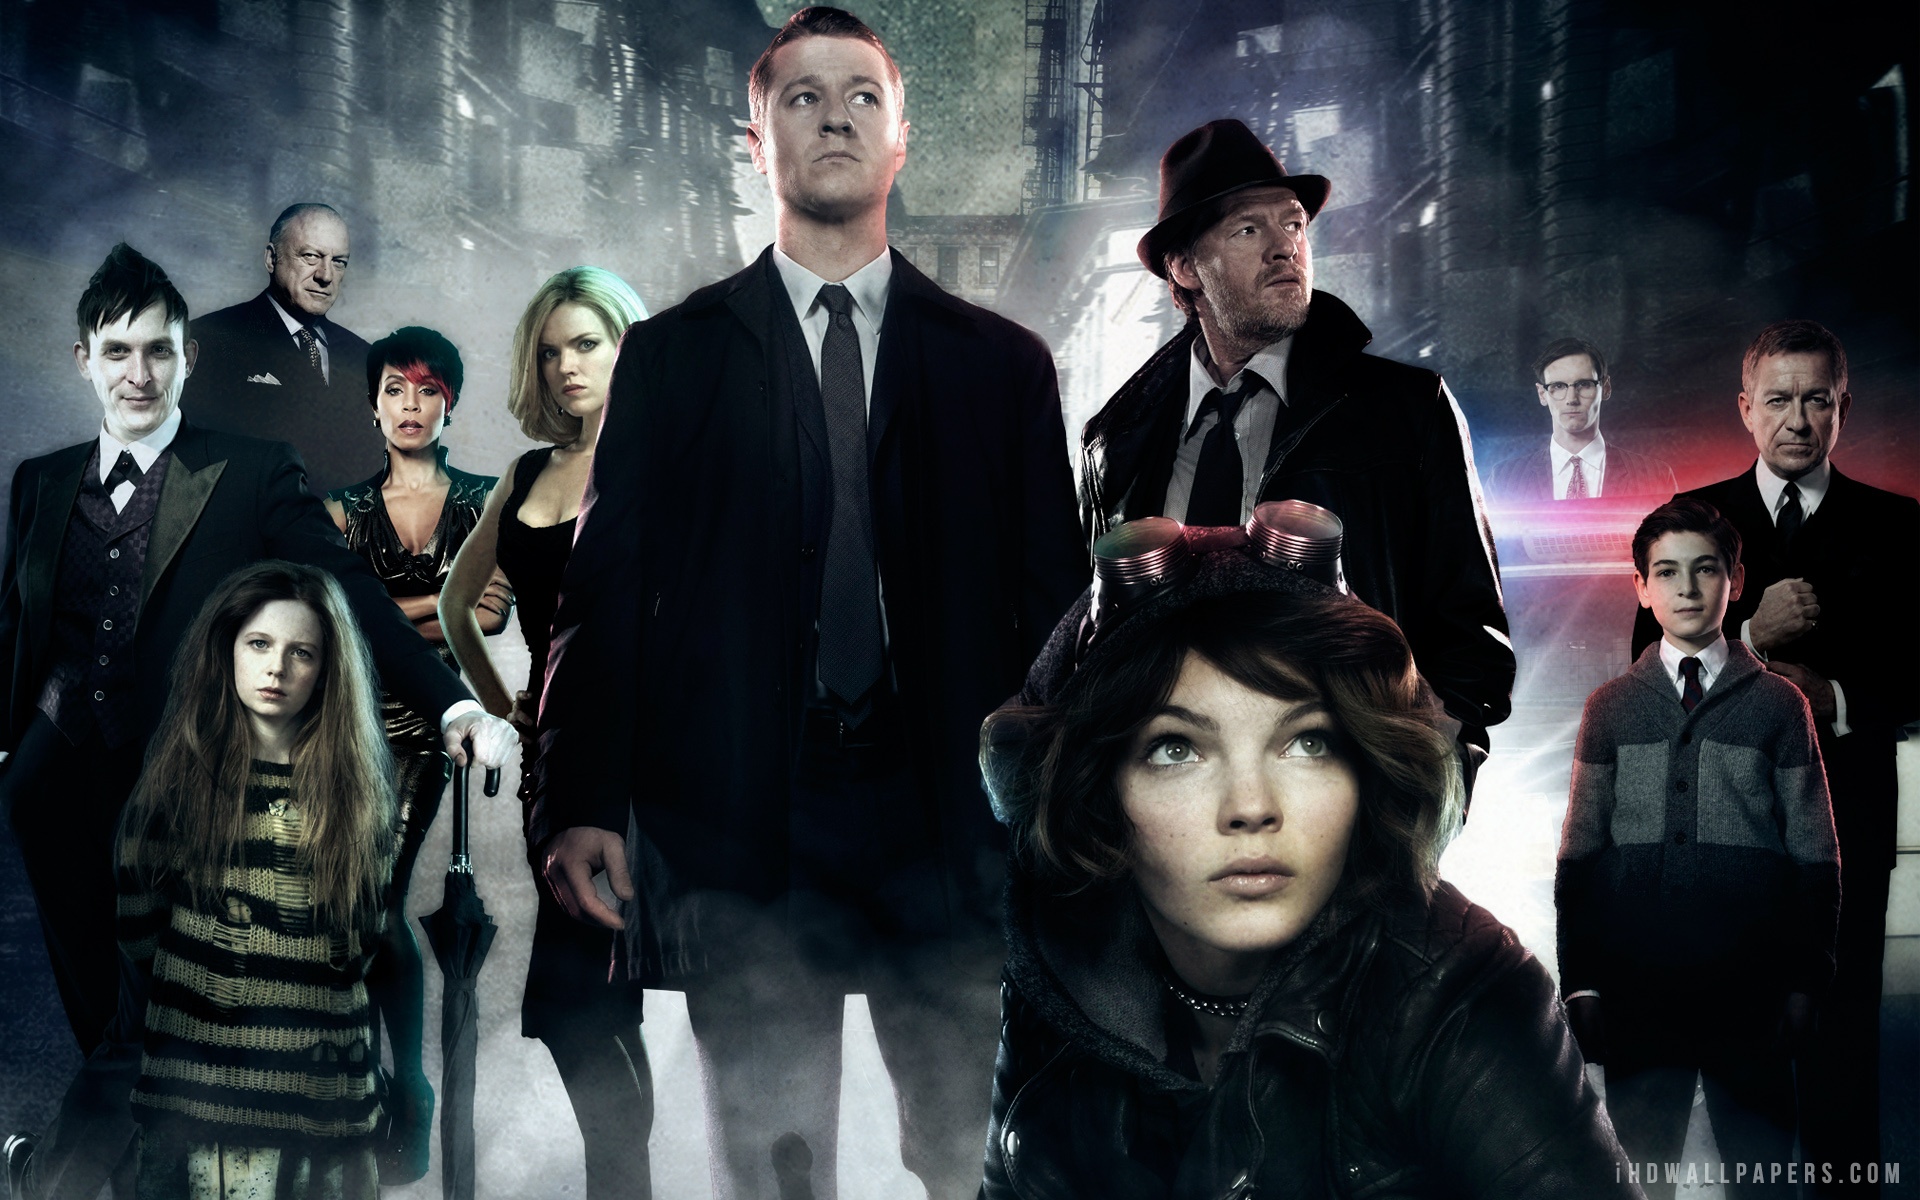 Gotham Tv Show Wallpaper